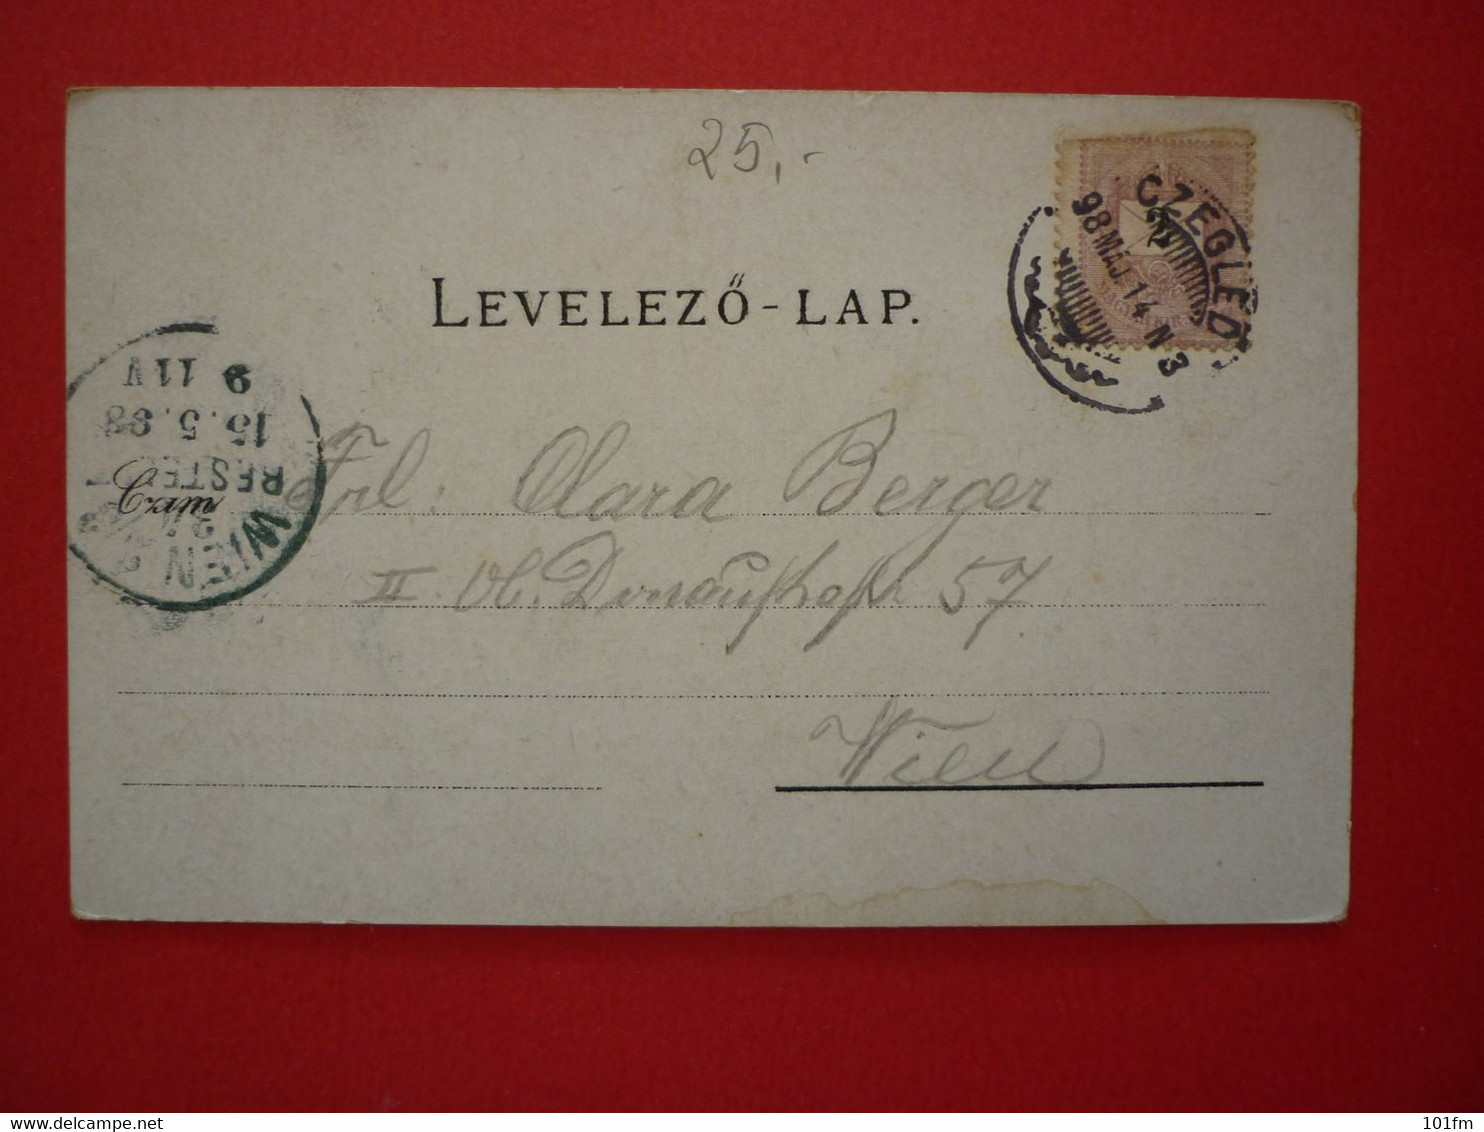 HUNGARY - CZEGLED , UDVOZLET CZEGLEDROL , OLD LITHO 1898 - Hungría